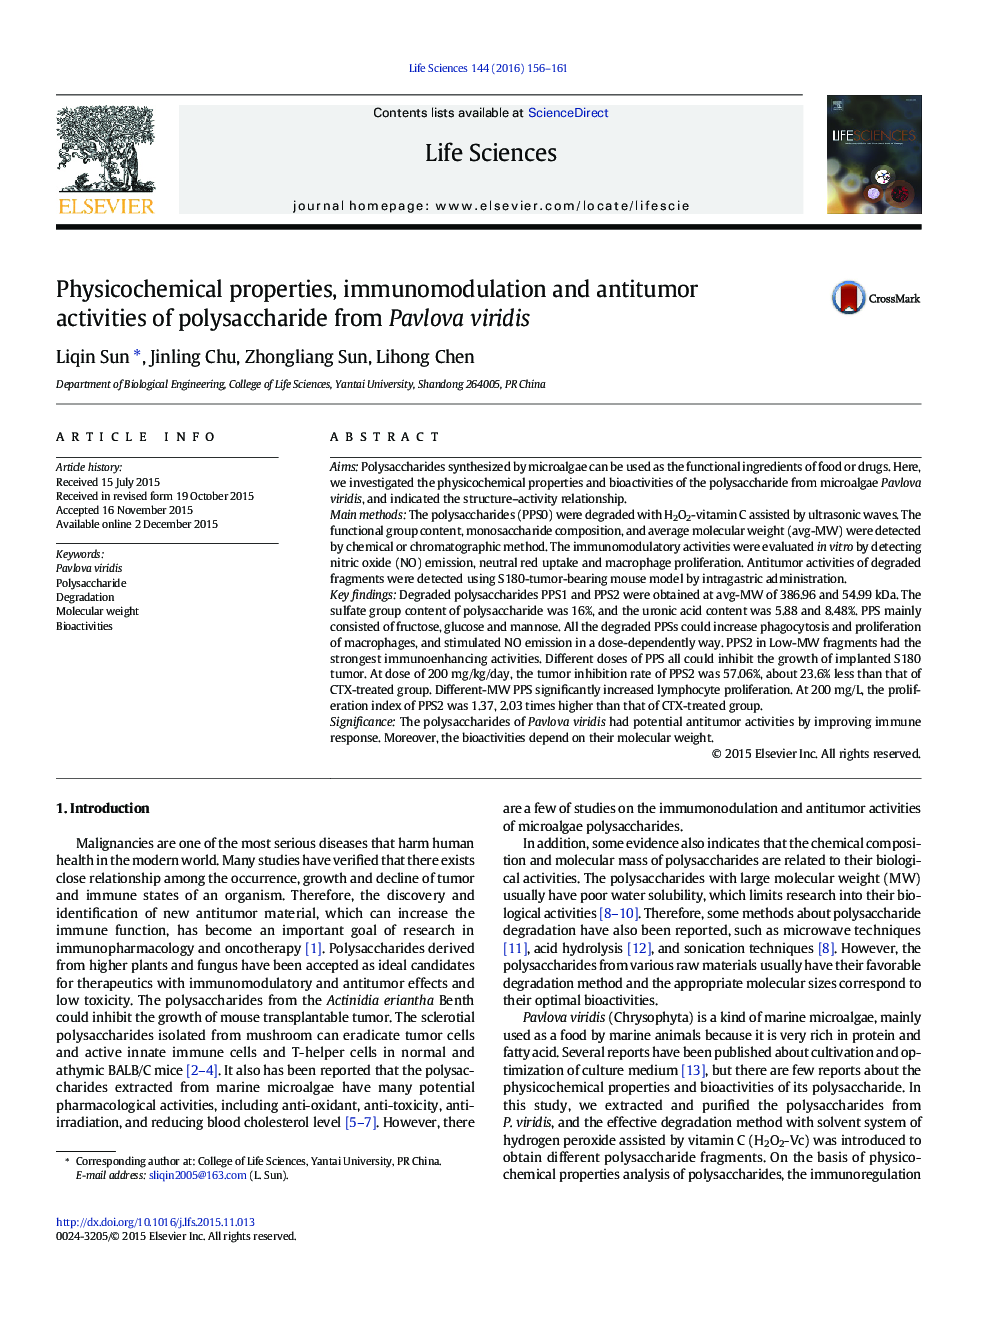 Physicochemical properties, immunomodulation and antitumor activities of polysaccharide from Pavlova viridis